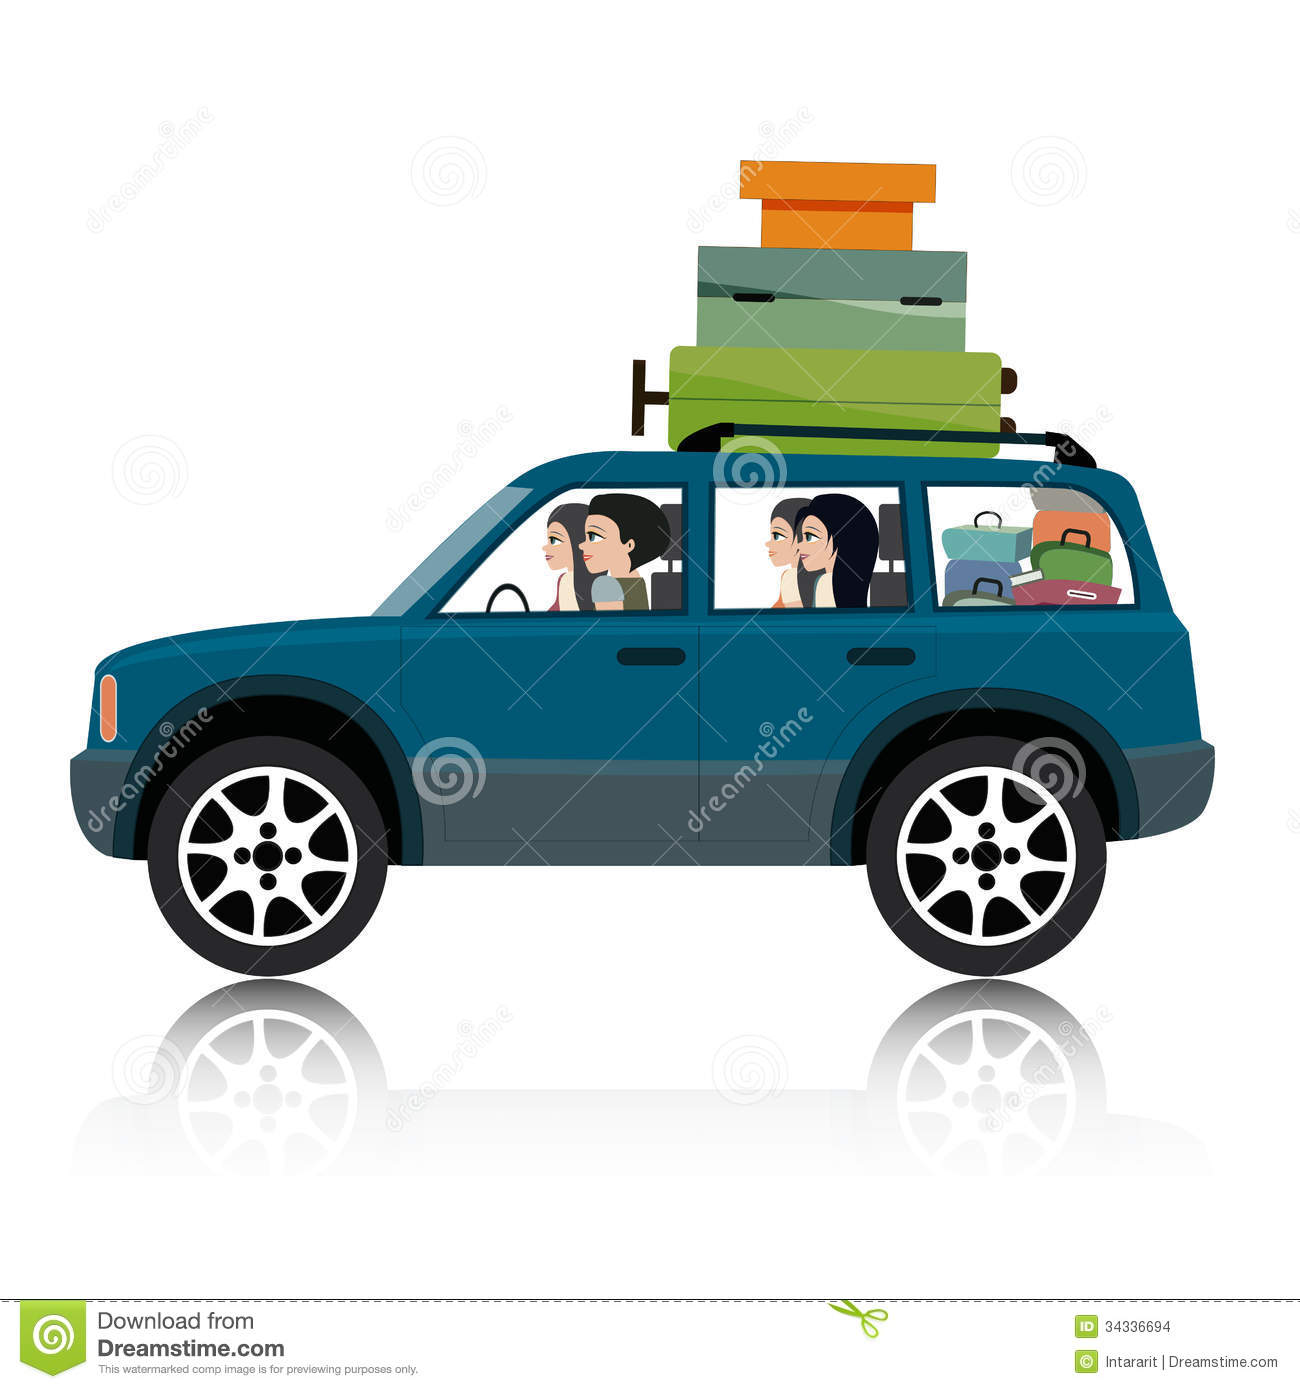 Car Suv Luggage  Stock Images   Image  34336694